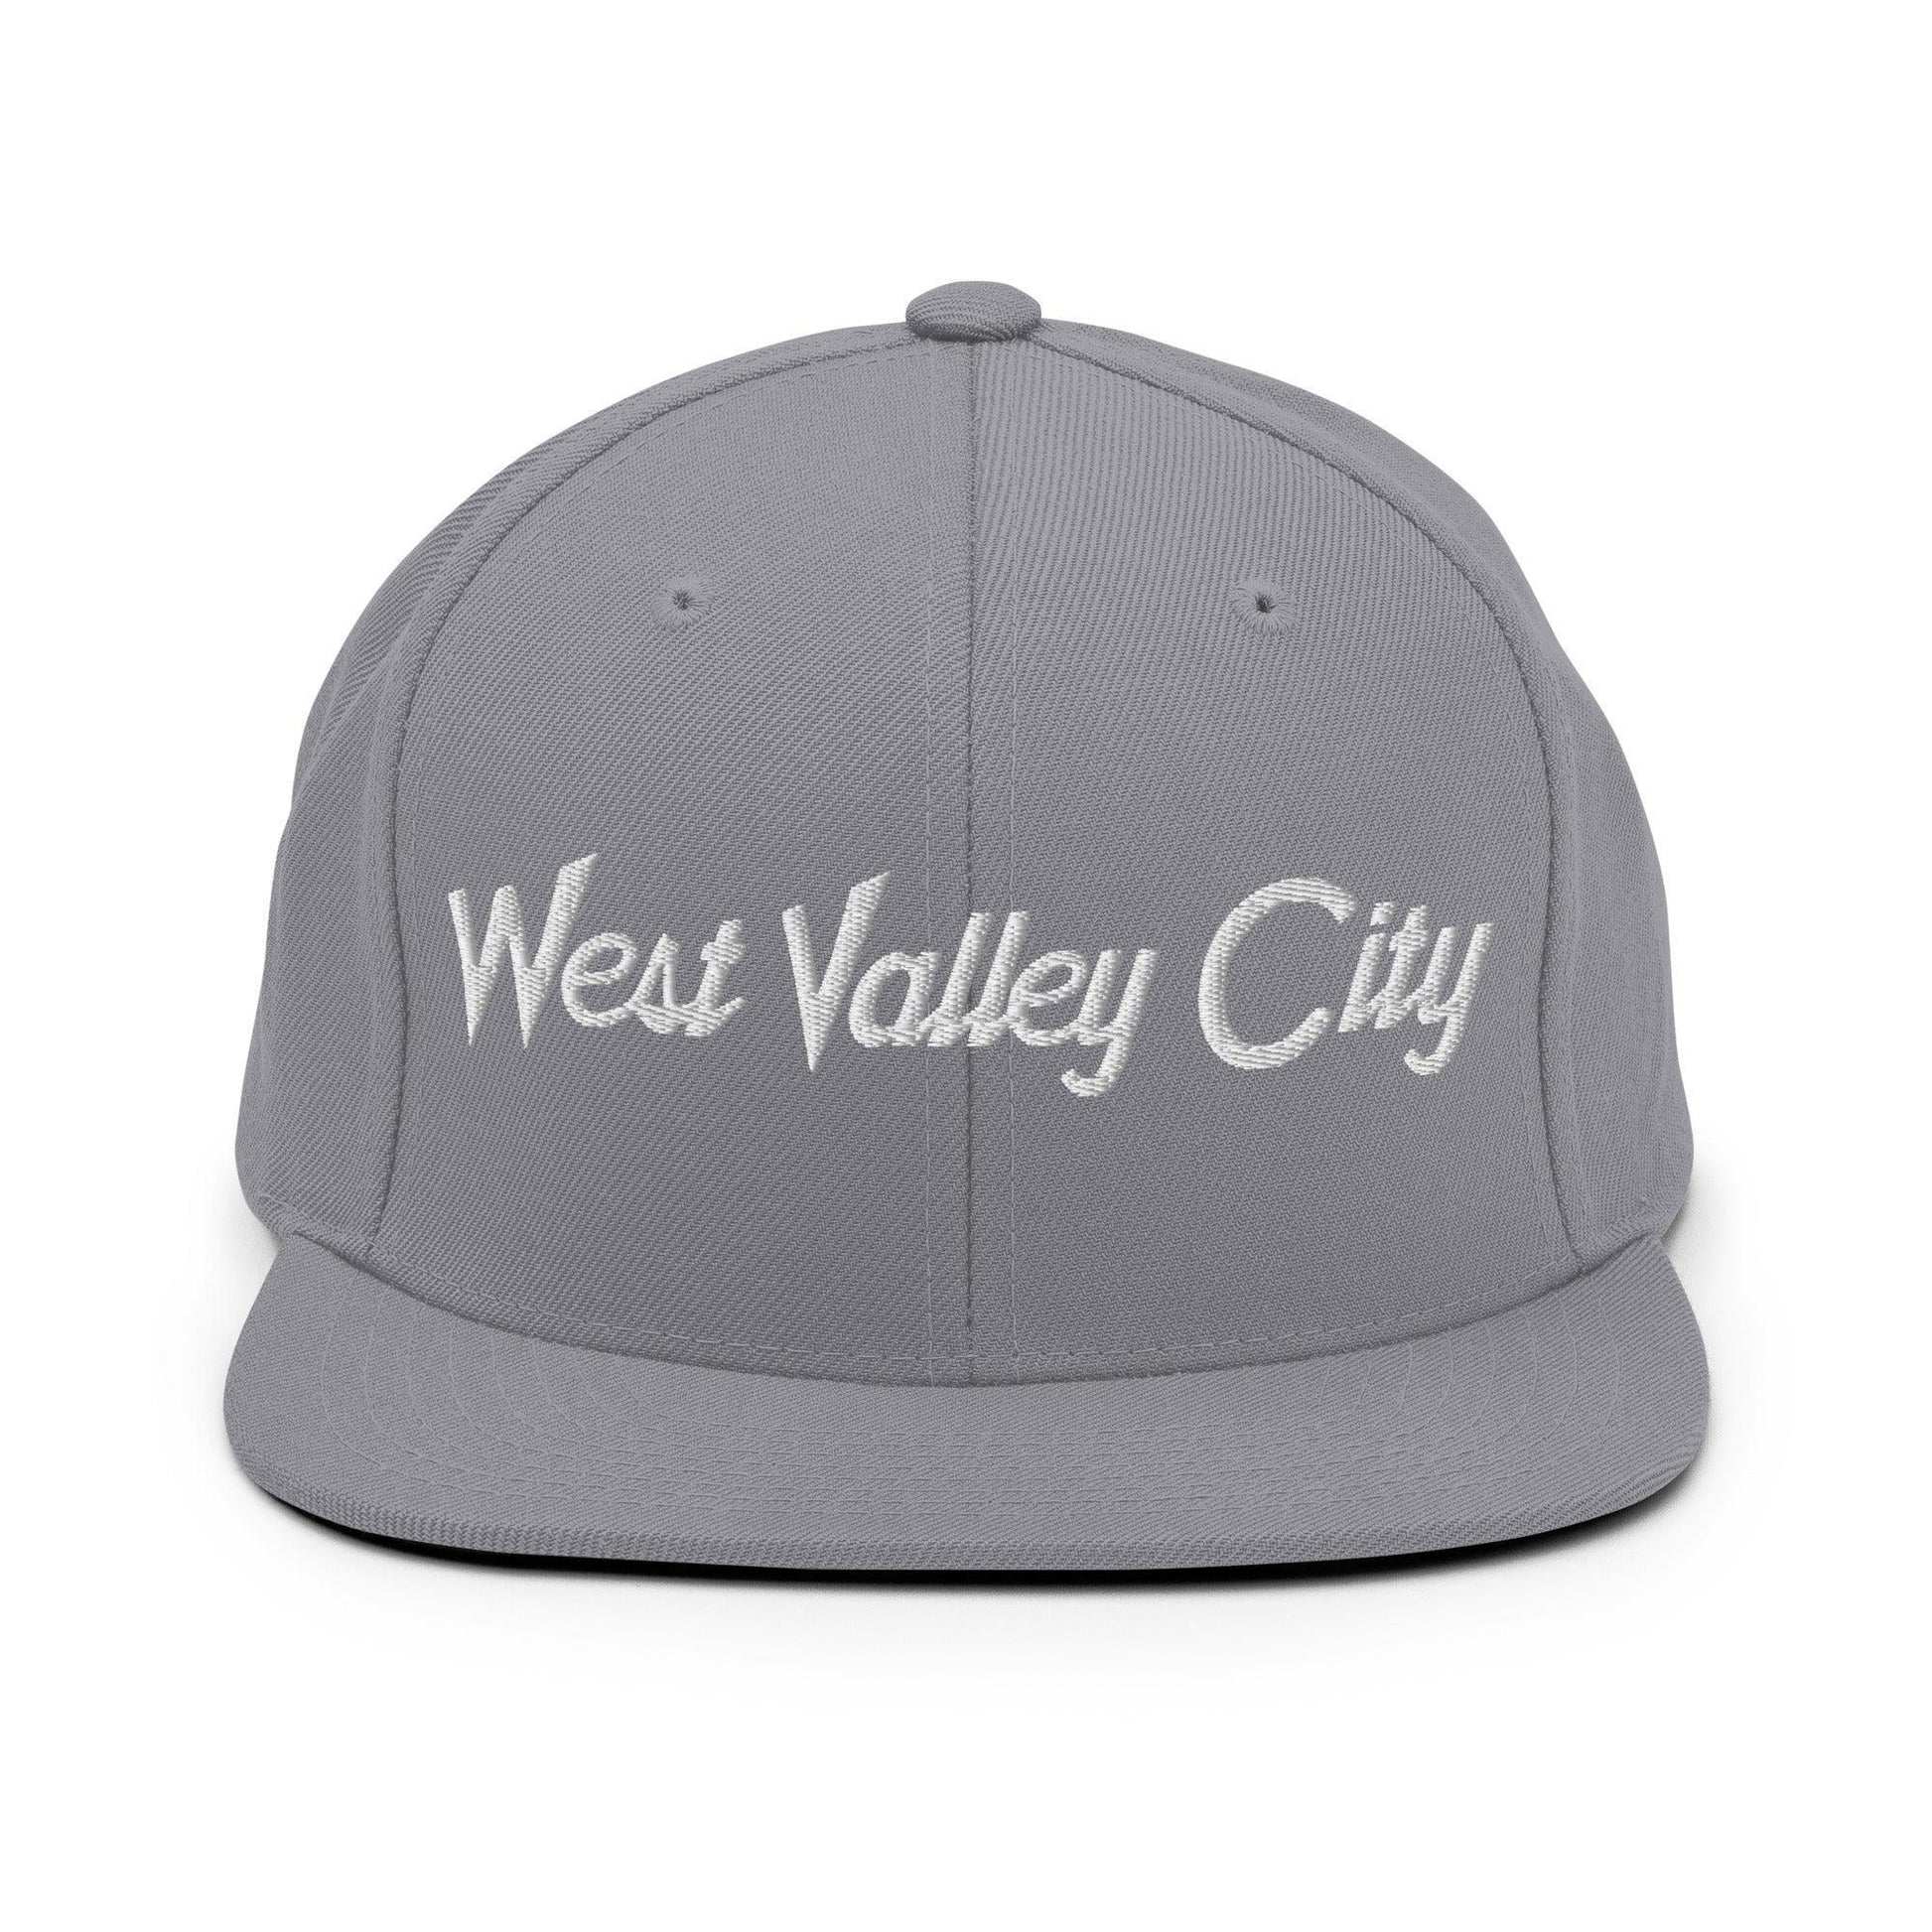 West Valley City Script Snapback Hat Silver